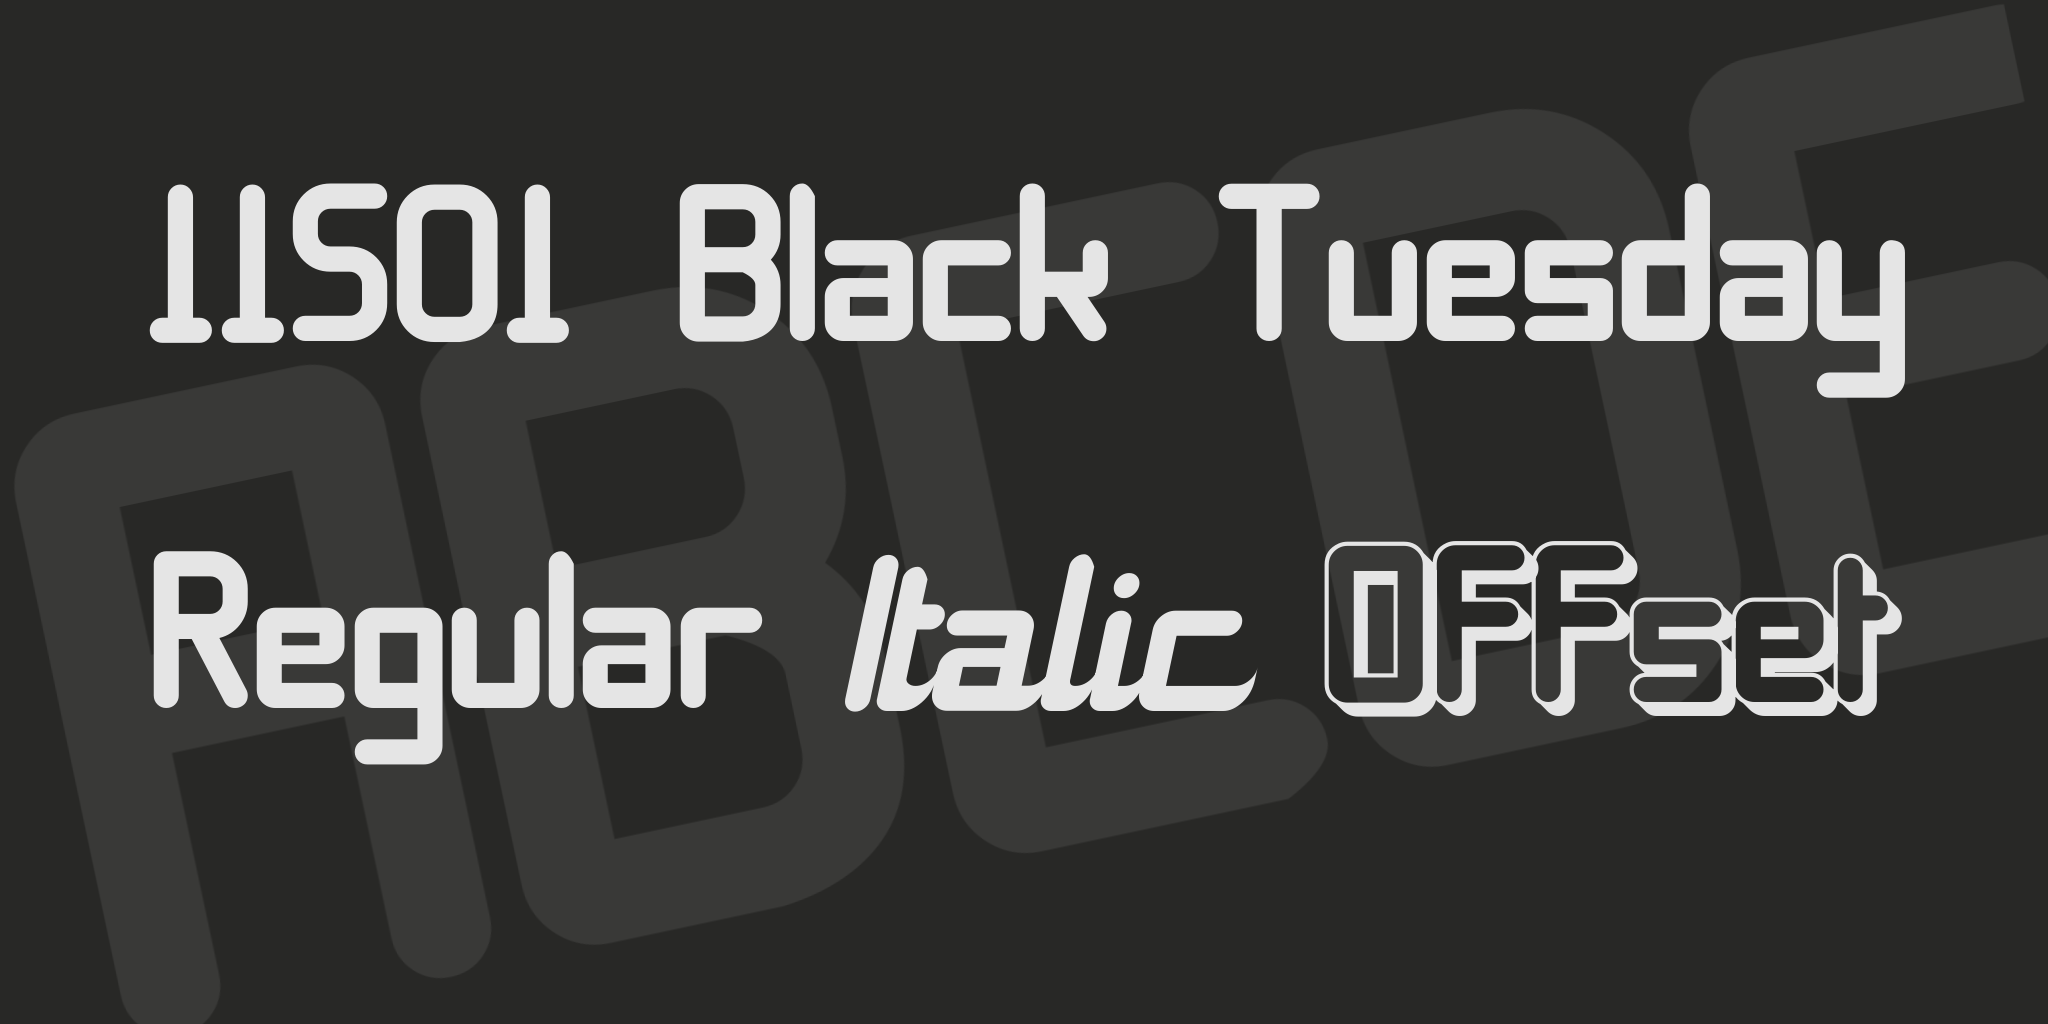 11S01 Black Tuesday